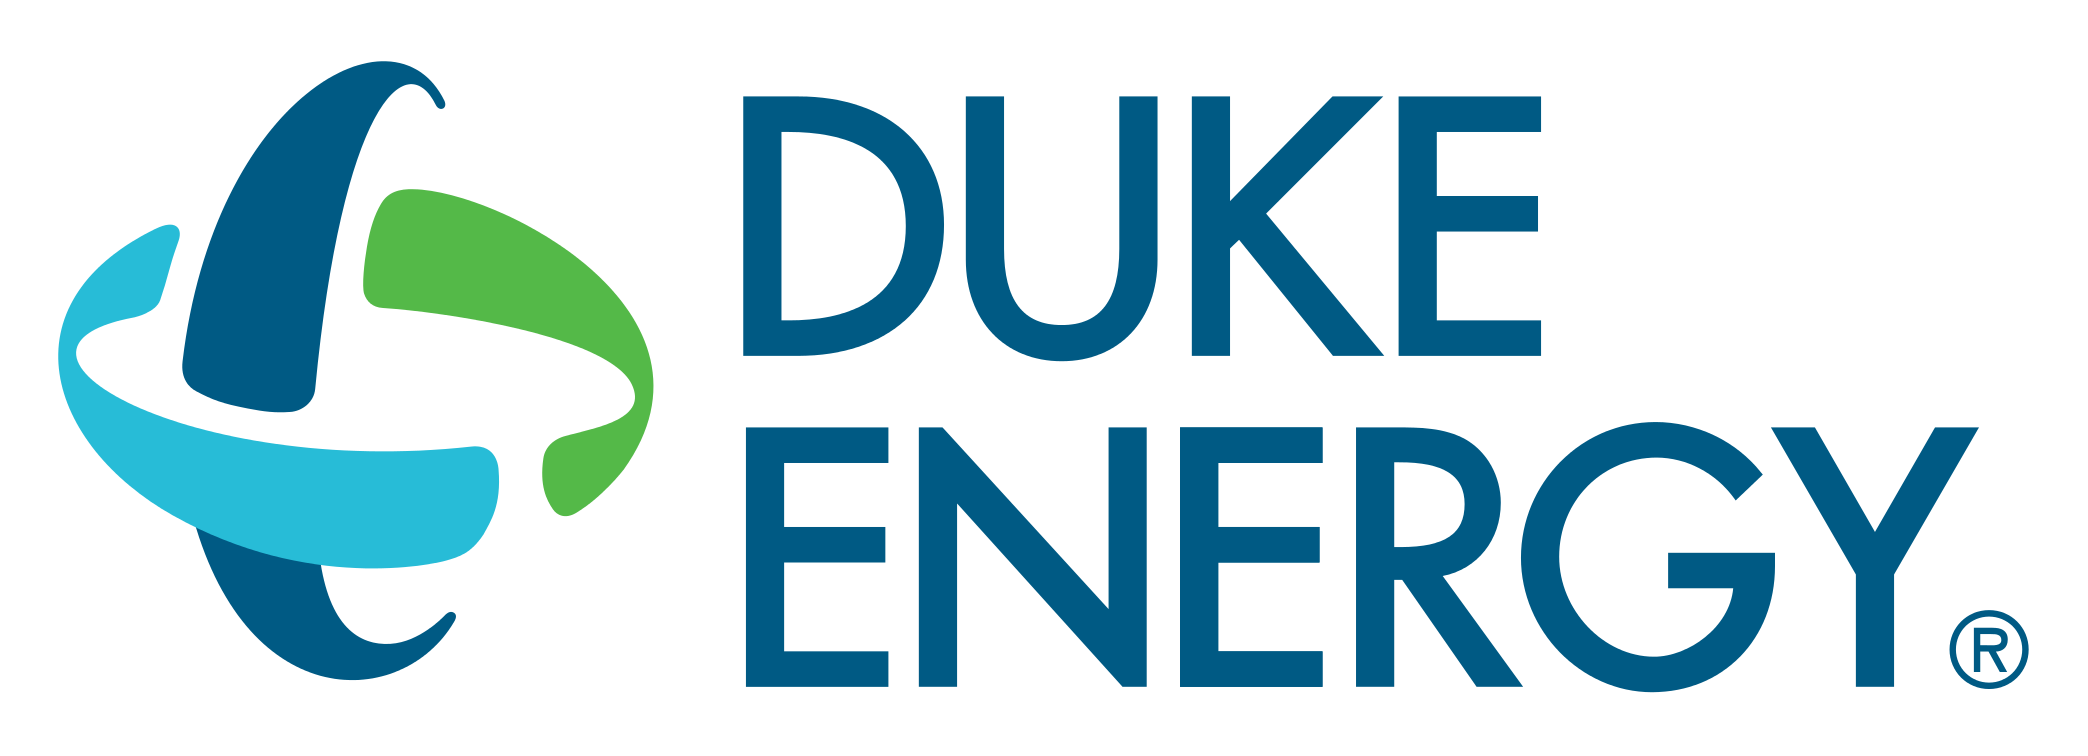 Duke Energy Logo PNG Image PurePNG Free transparent CC0 PNG Image